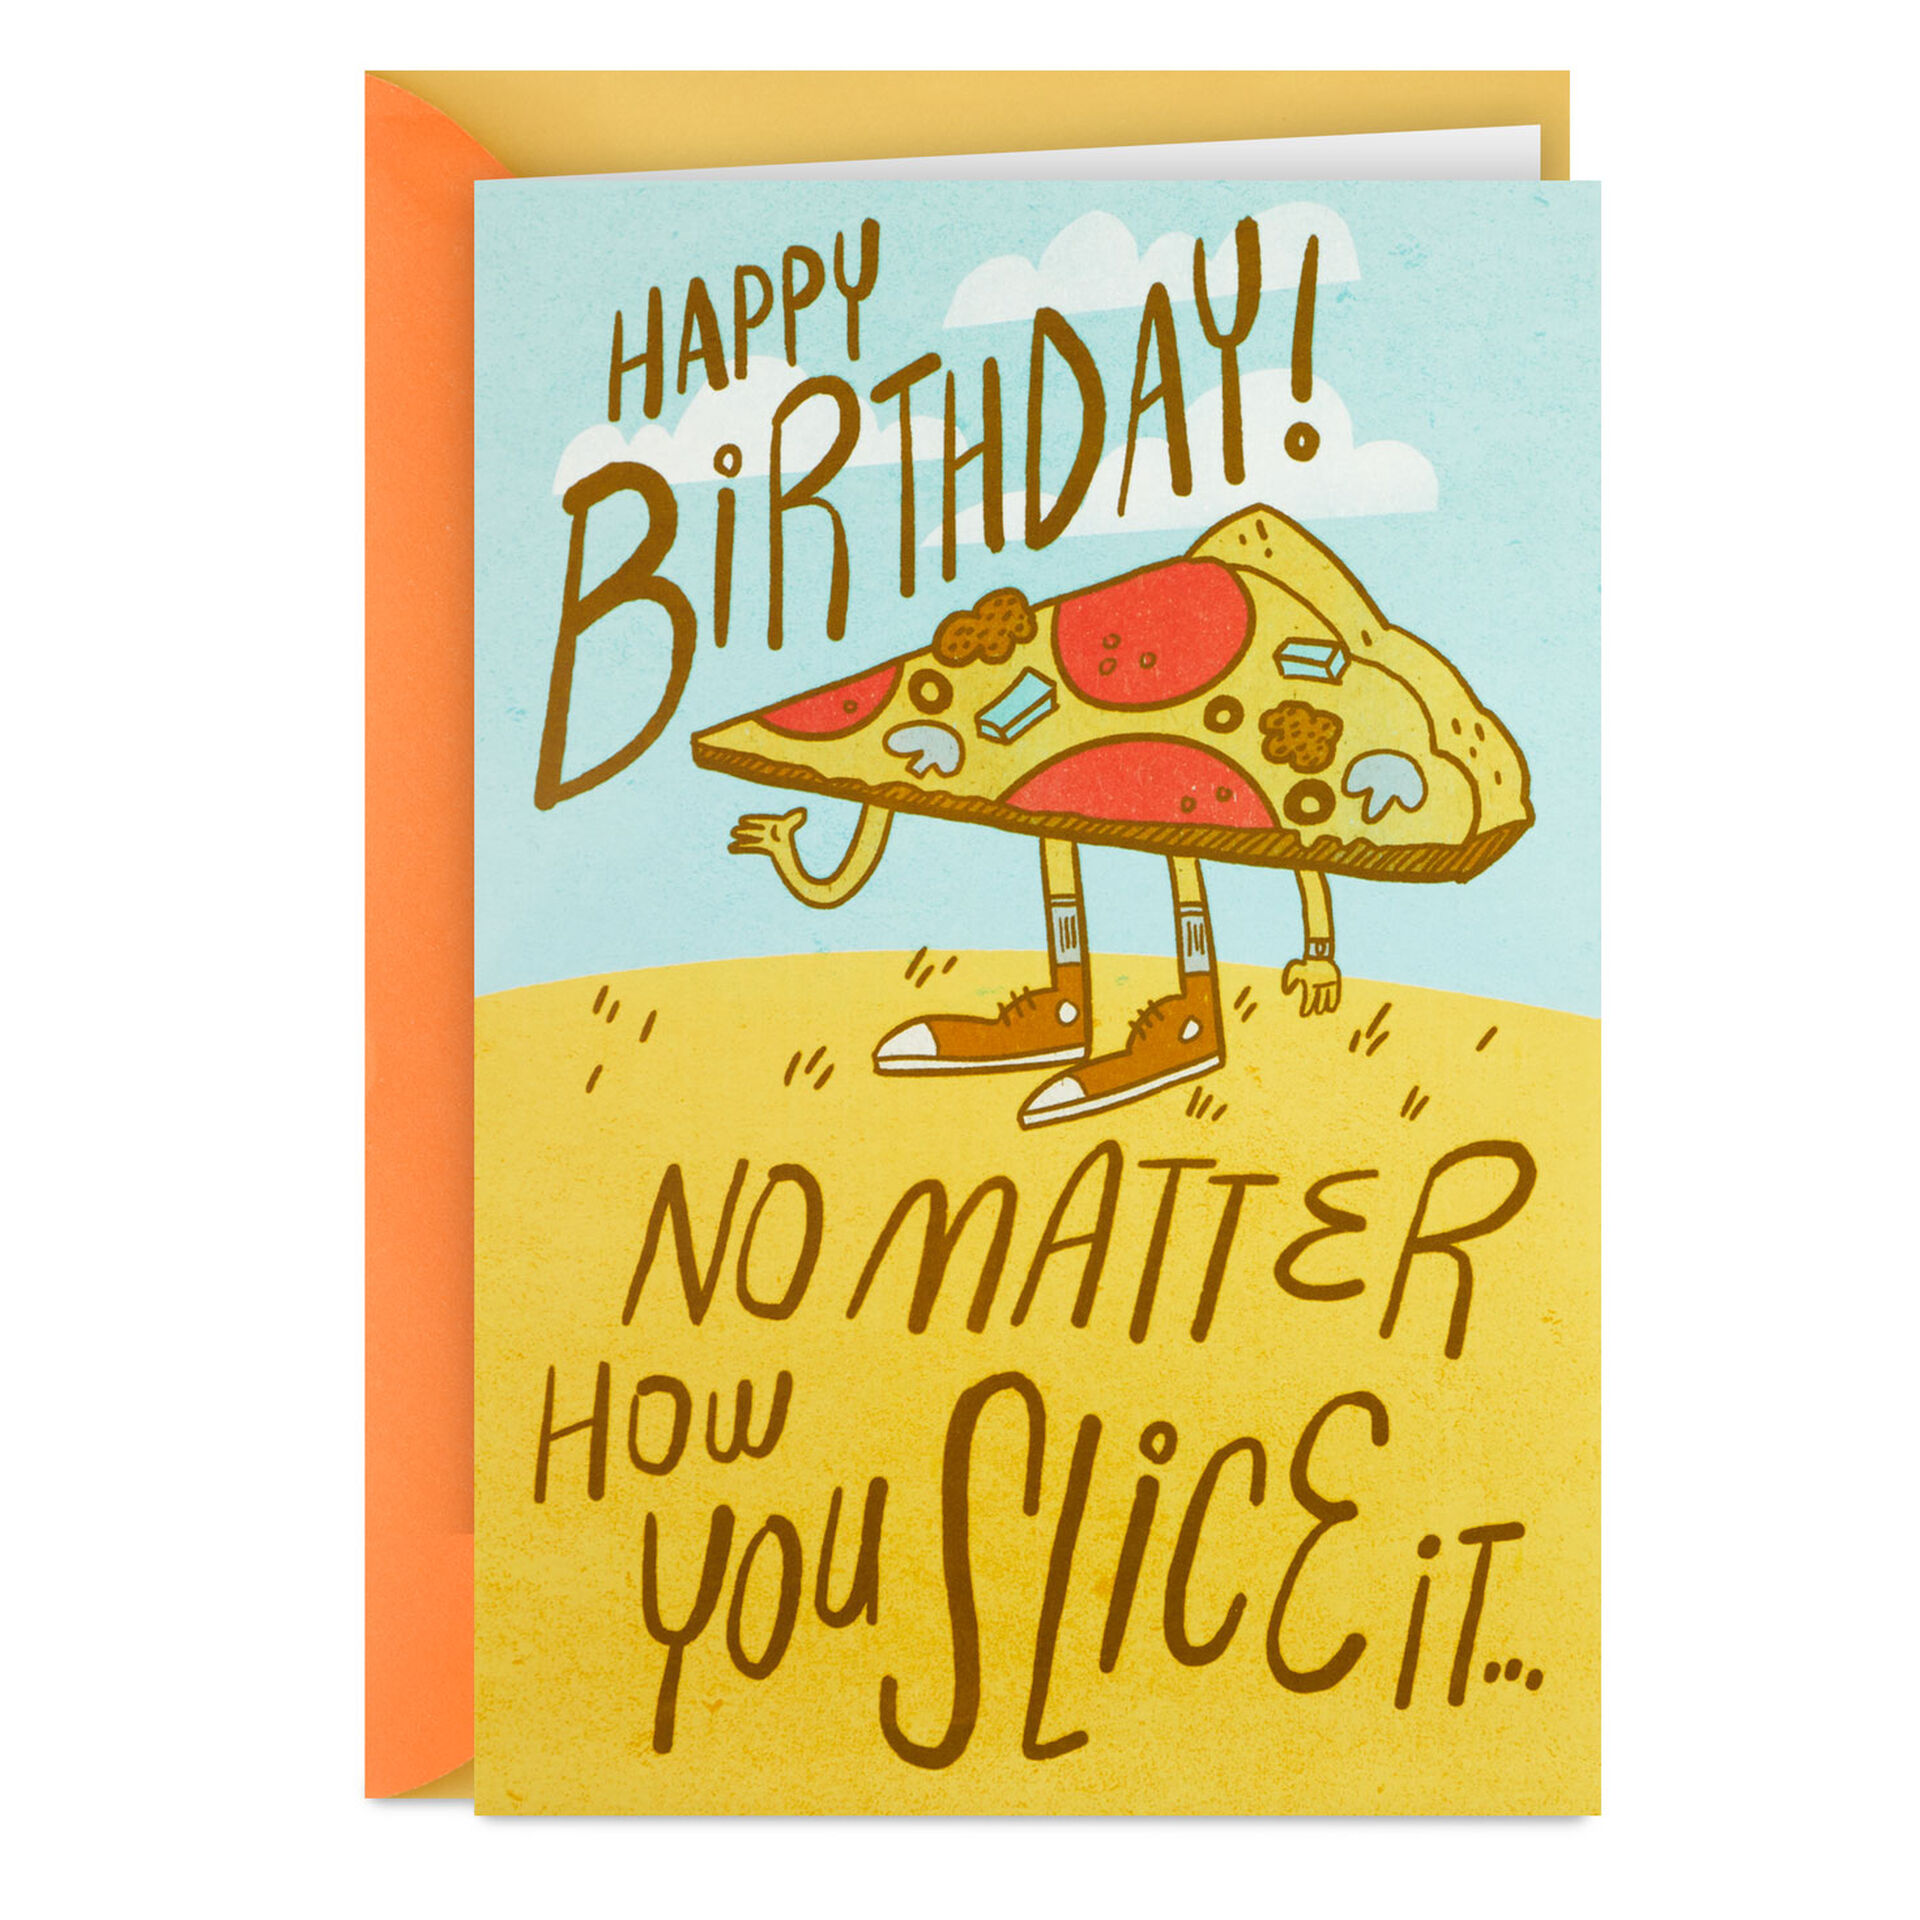 Slice-of-Pizza-Funny-PopUp-Birthday-Card-for-Kids_559HKB9136_01